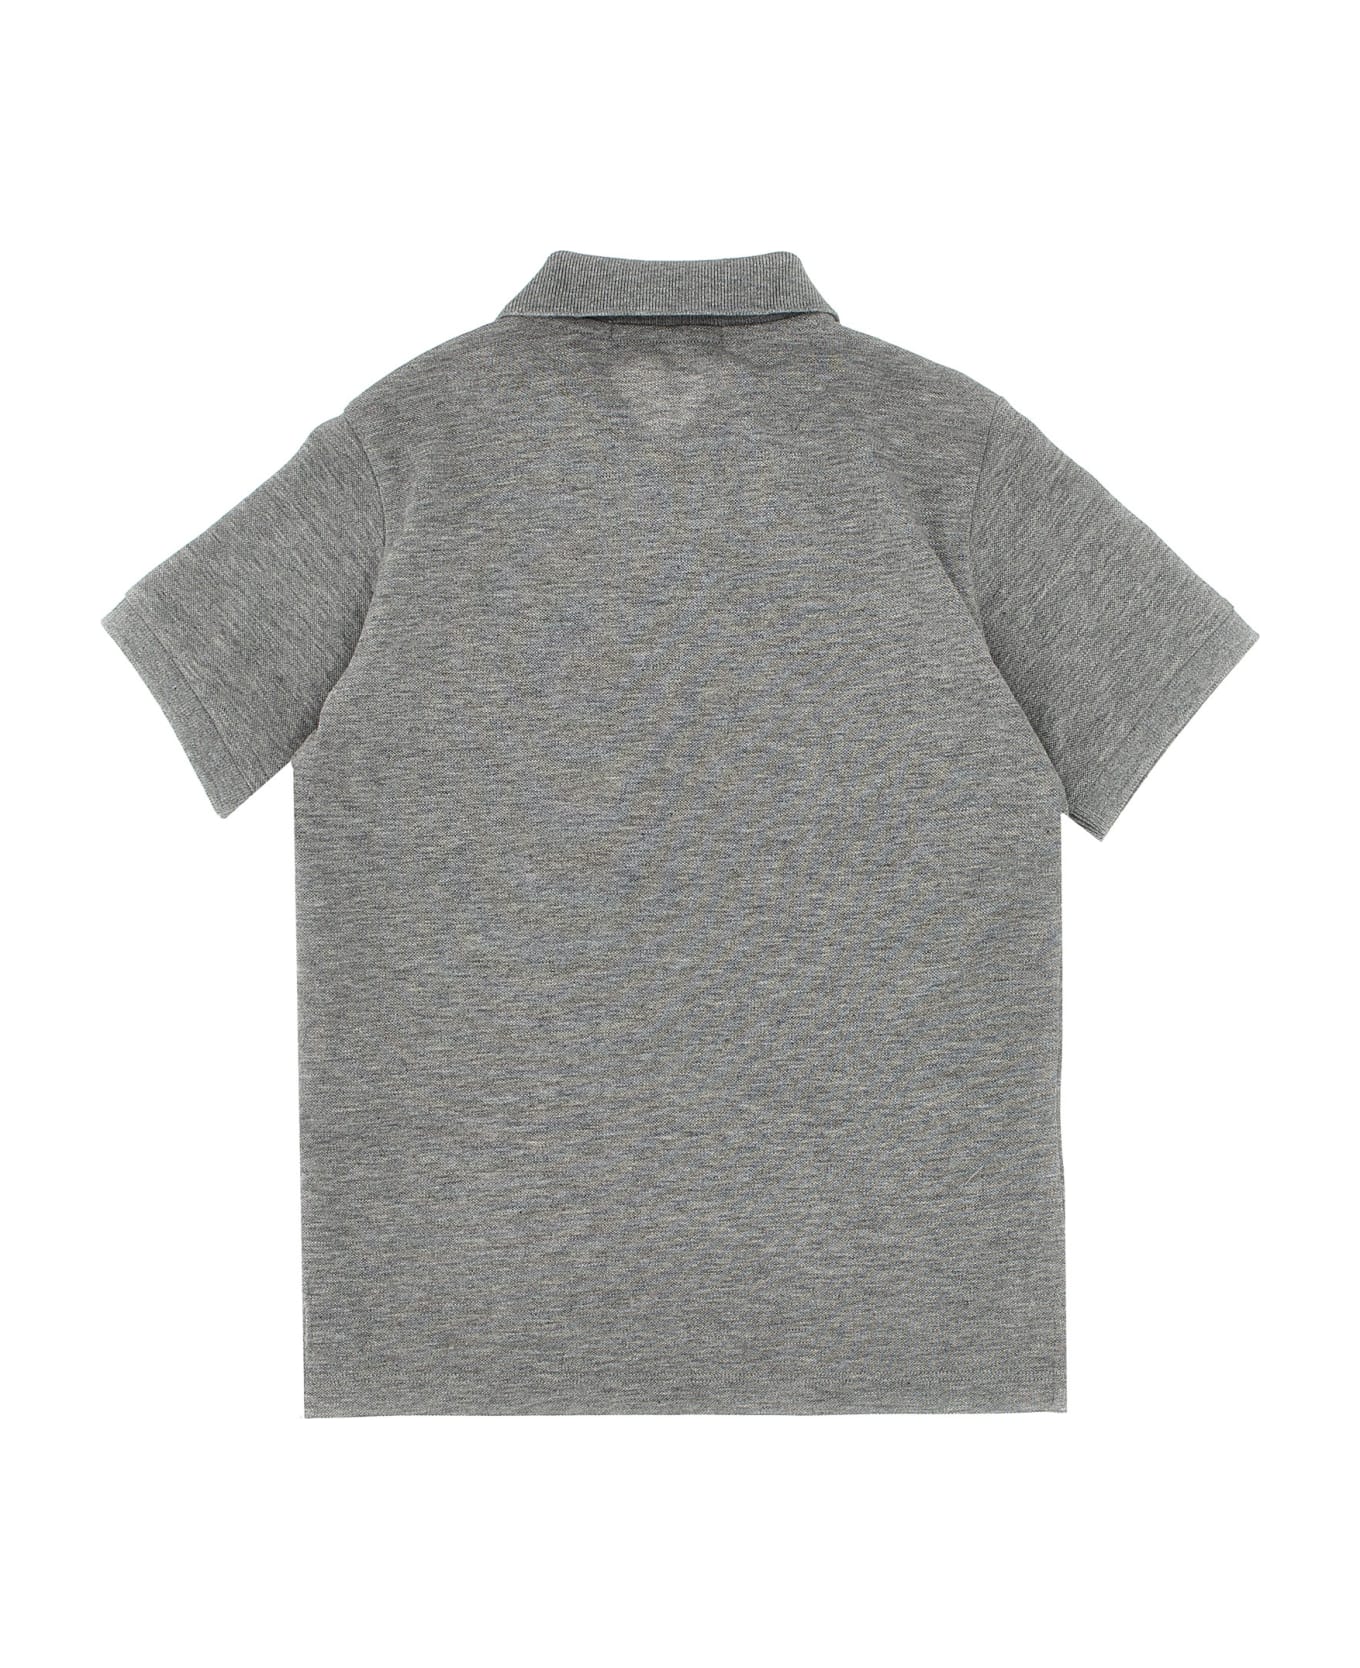 Stone Island Junior Logo Patch Polo Shirt - Gray